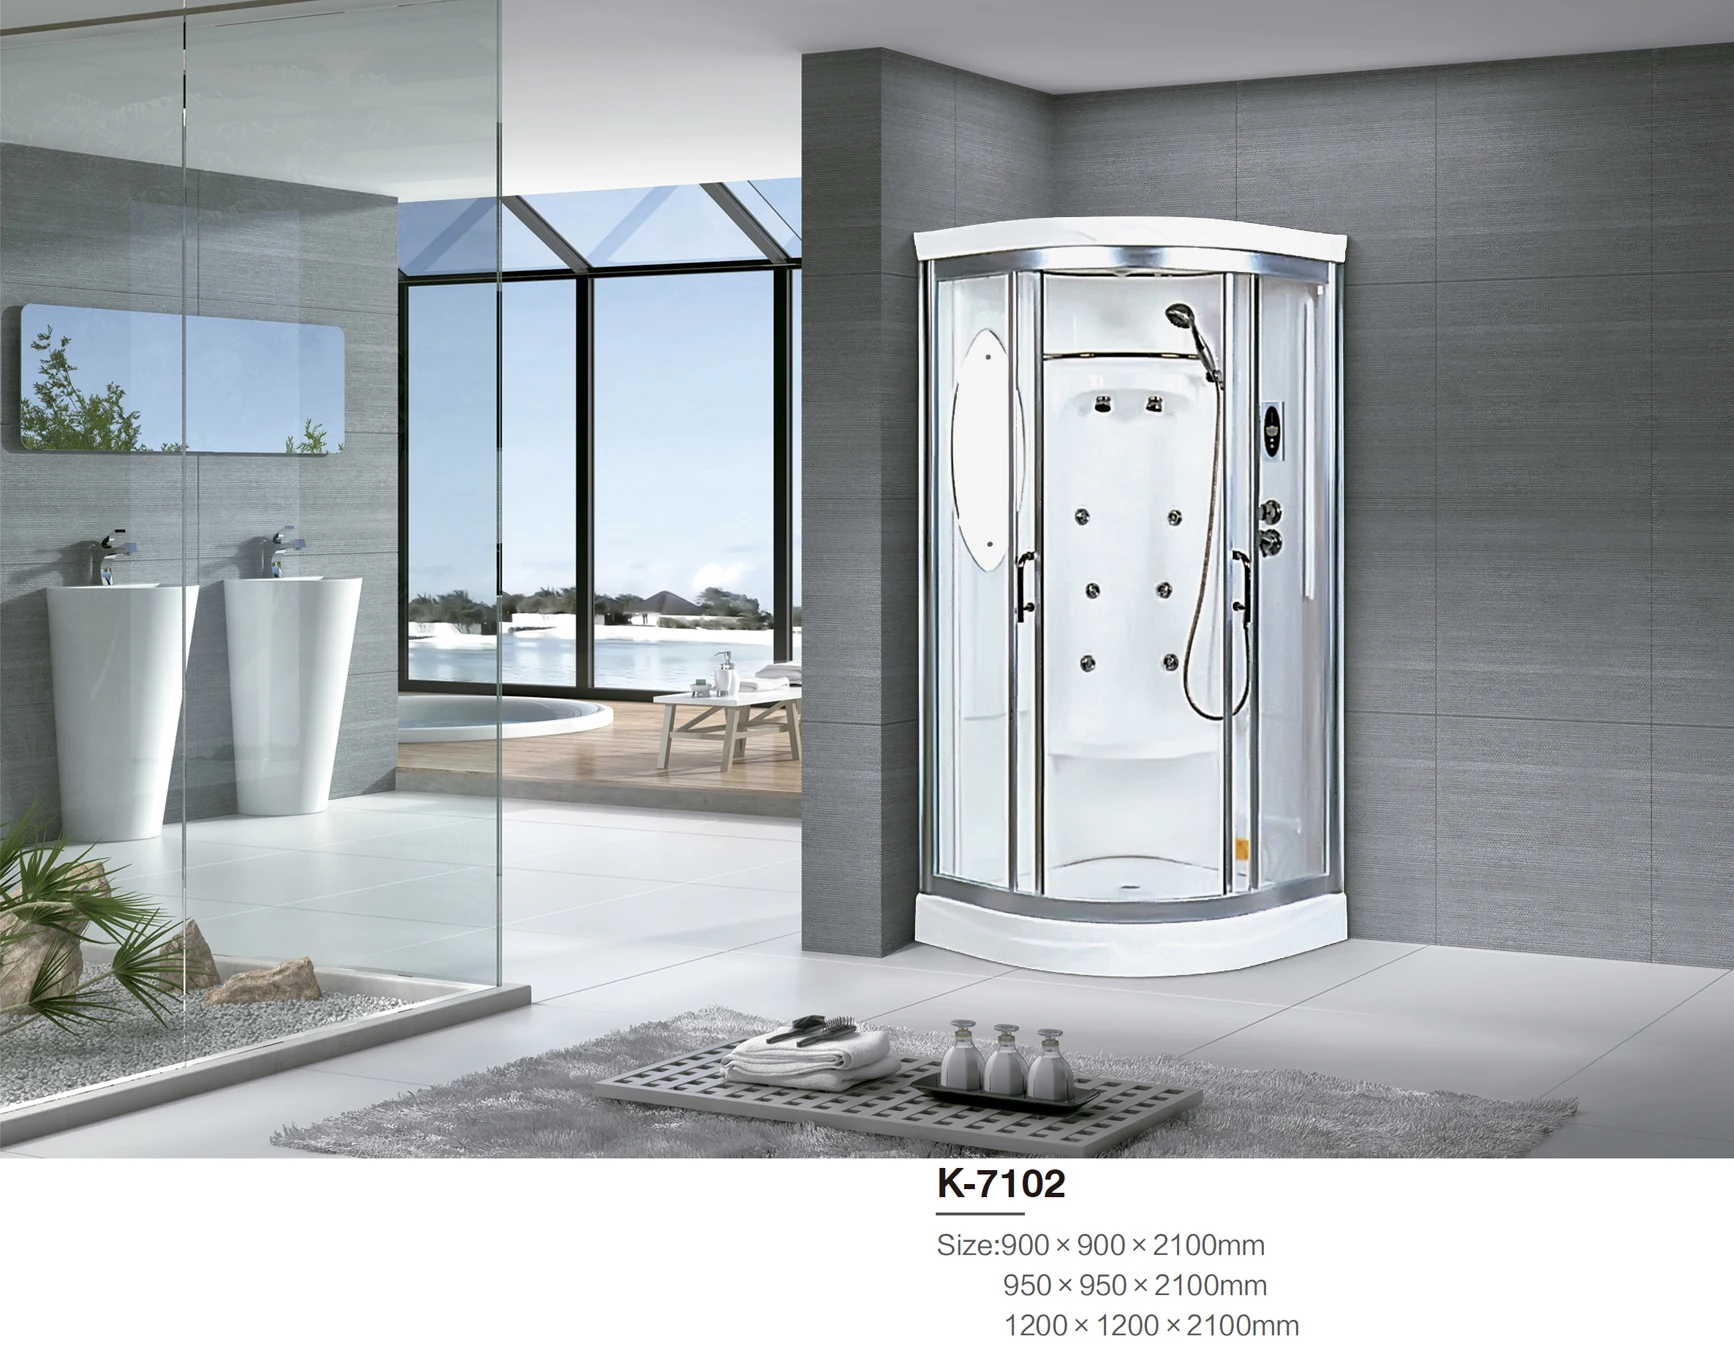 White whirlpool acrylic massage soaking jet shower steam room K7102